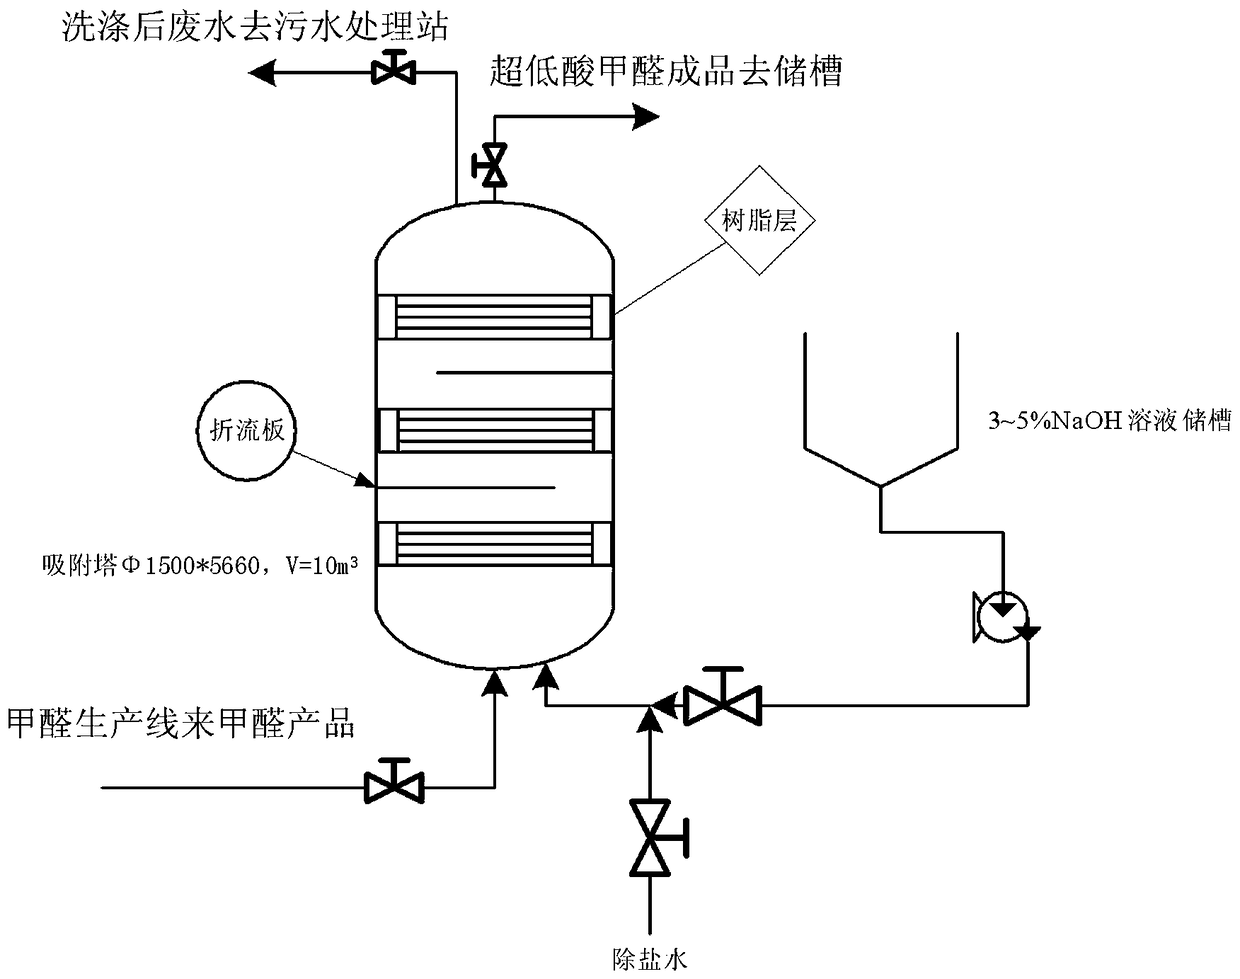 Method for producing ultralow-acid formaldehyde